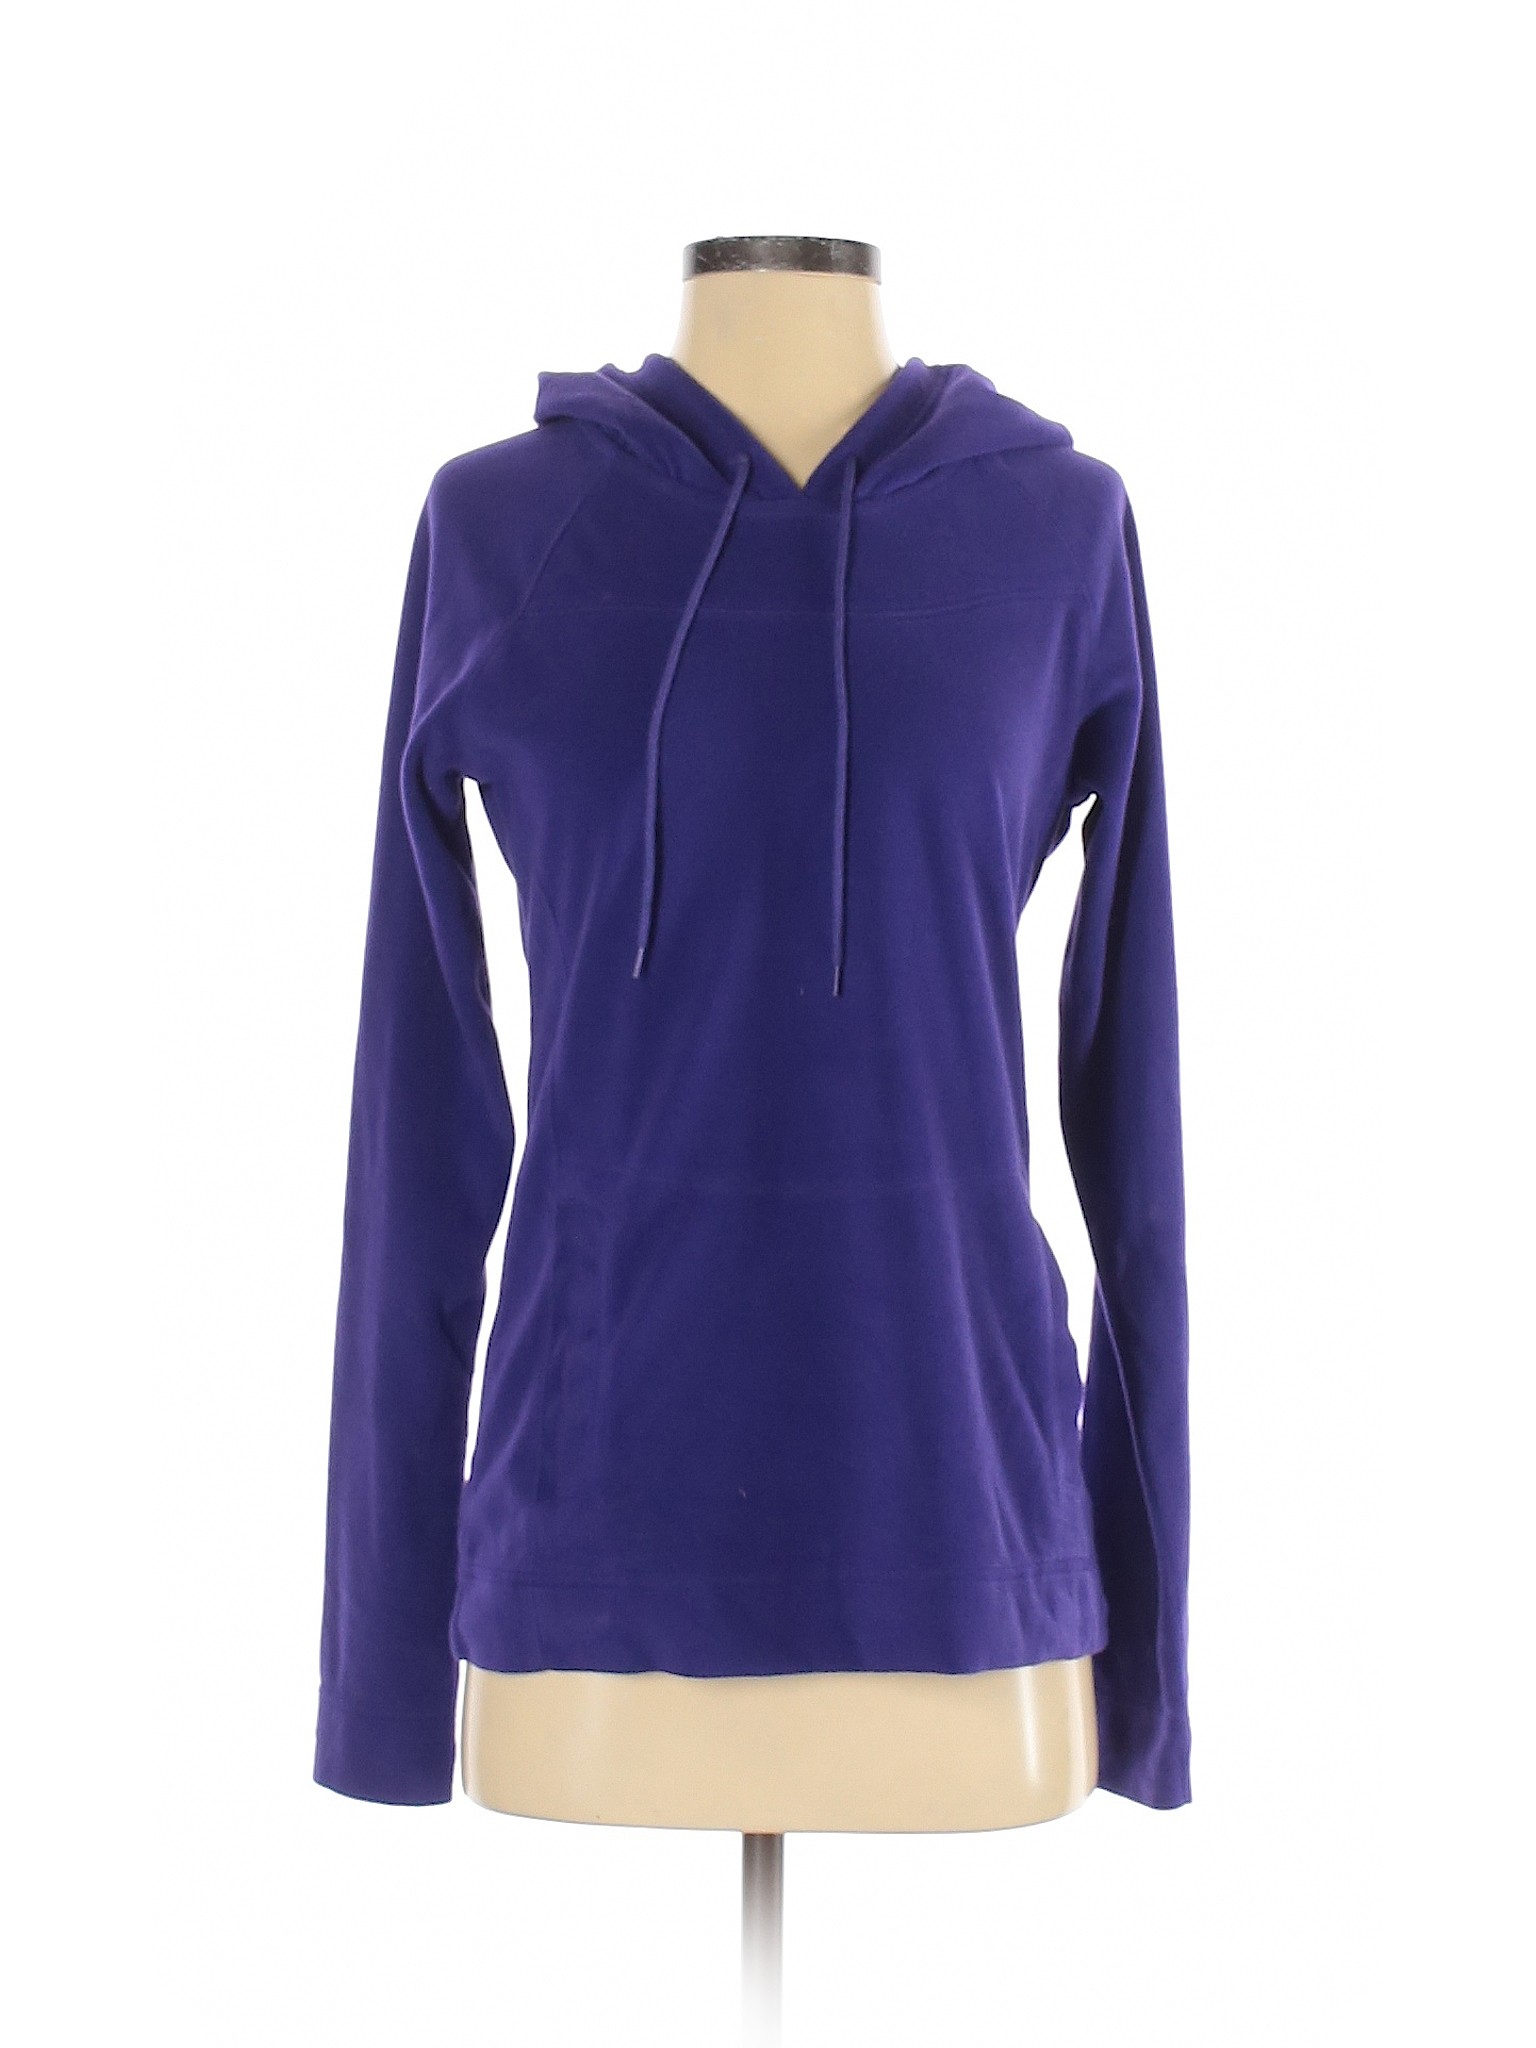 Columbia Women Purple Fleece S | eBay